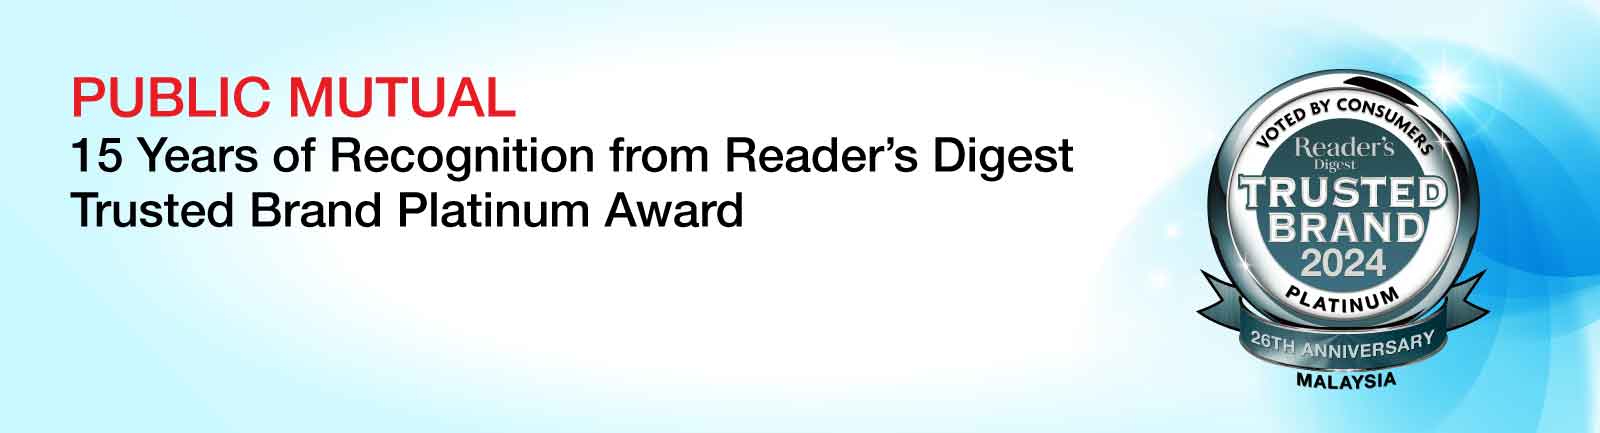 Reader's Digest Trusted Brand Platinum Award 2024